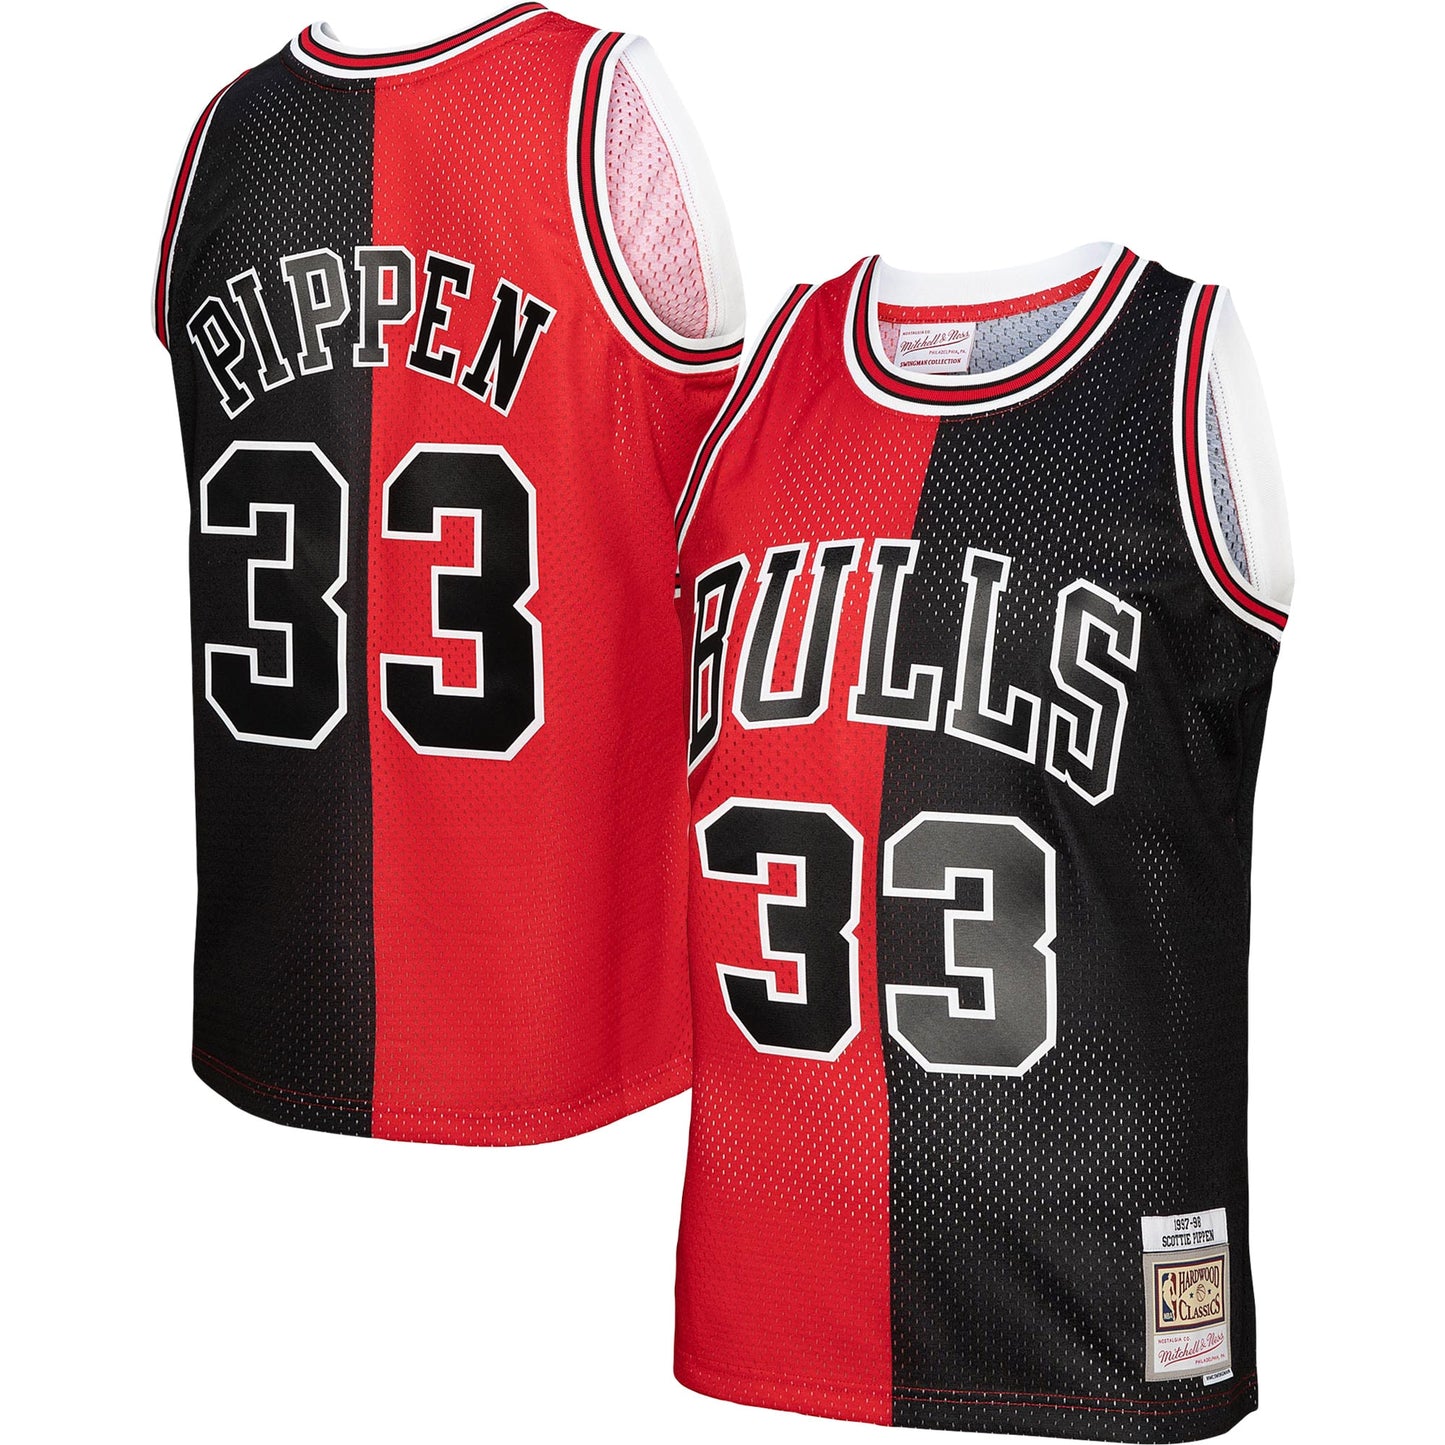 Scottie Pippen Chicago Bulls Mitchell & Ness Hardwood Classics 1997/98 Split Swingman Jersey - Red/Black